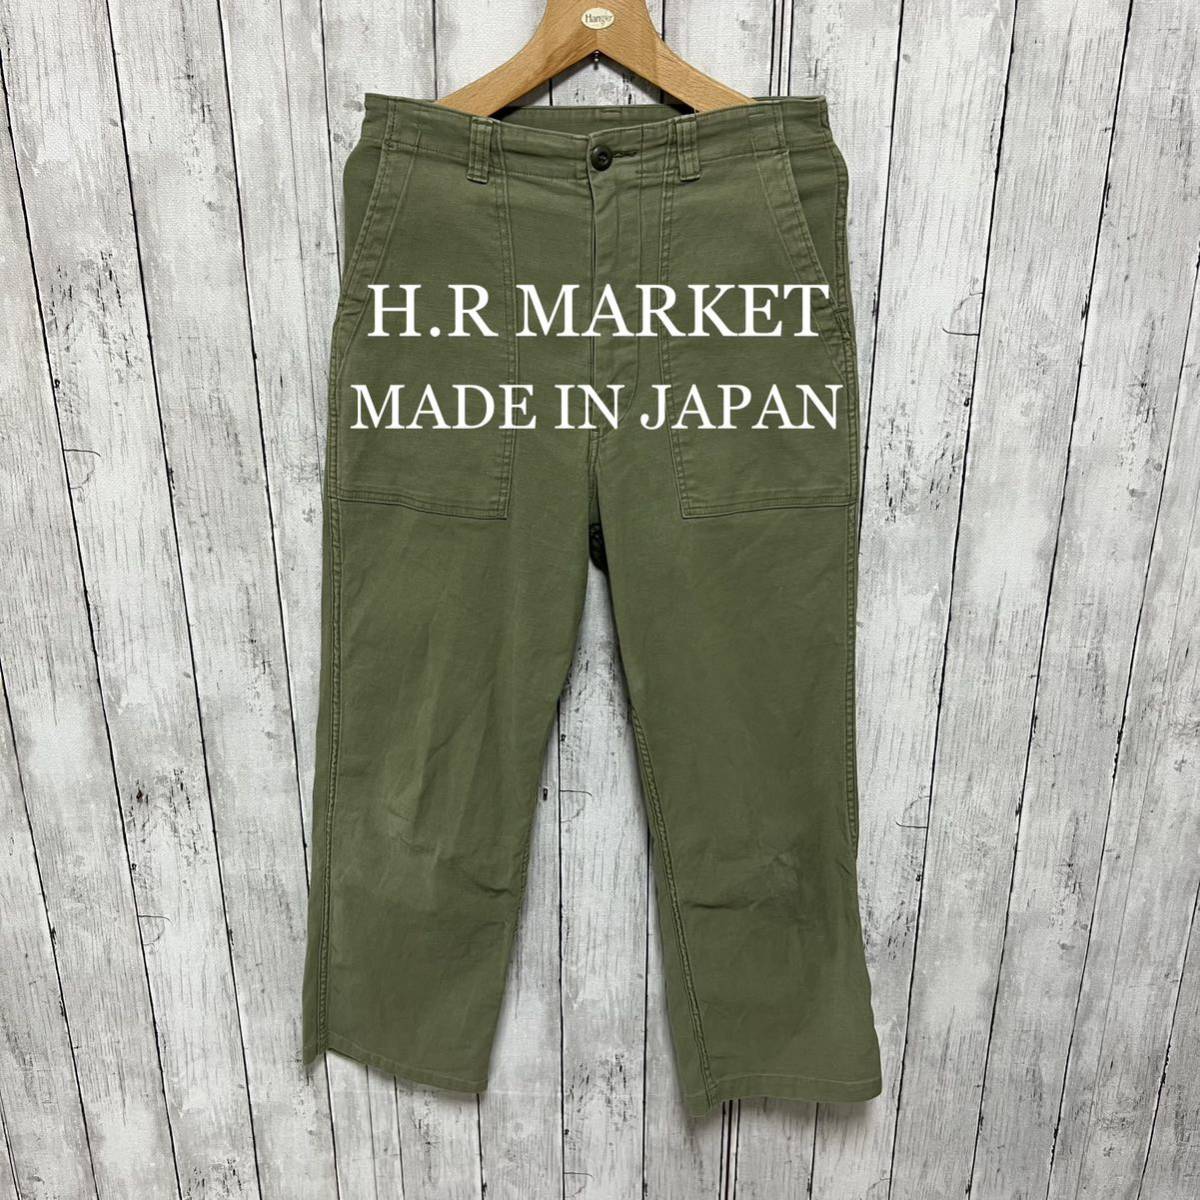 H.R MARKET ストレッチミリタリーパンツ！日本製！